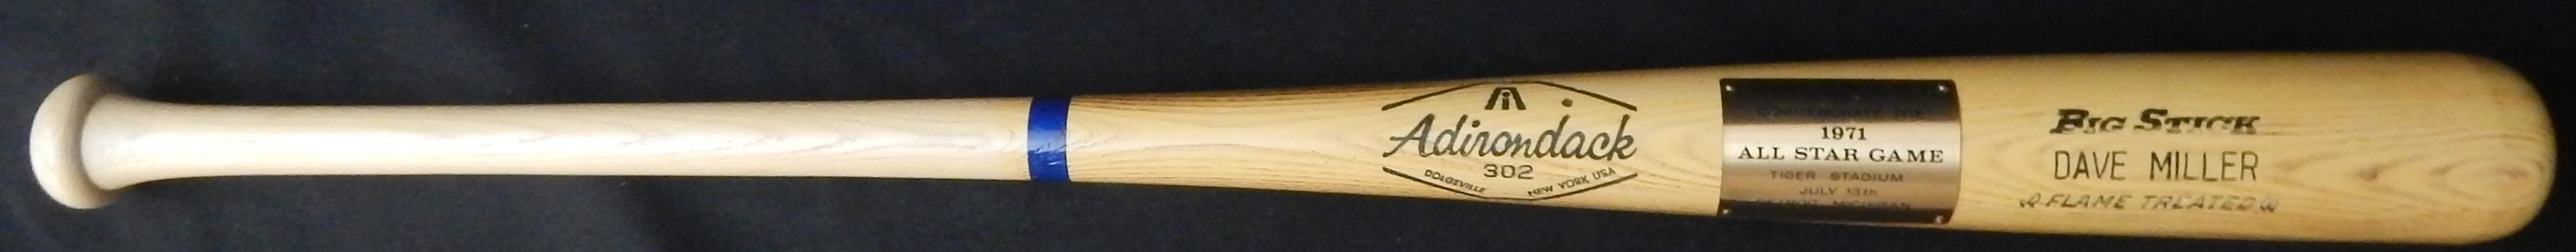 - 1971 All-Star Game Presentational Bat